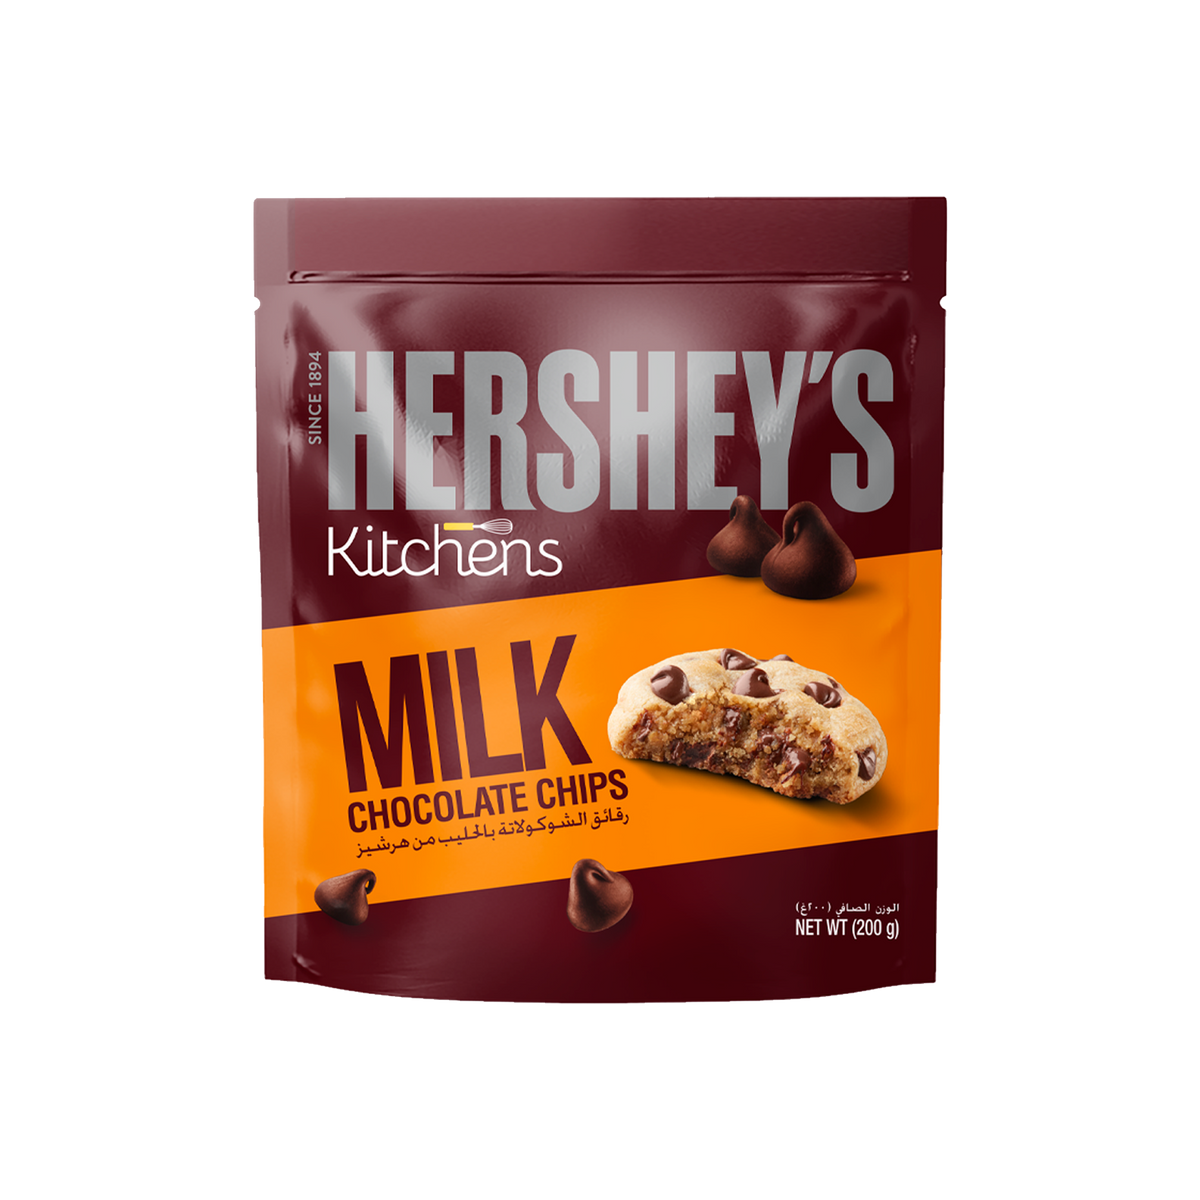 Hersheys Kitchen Milk Chocolate Chips 200g